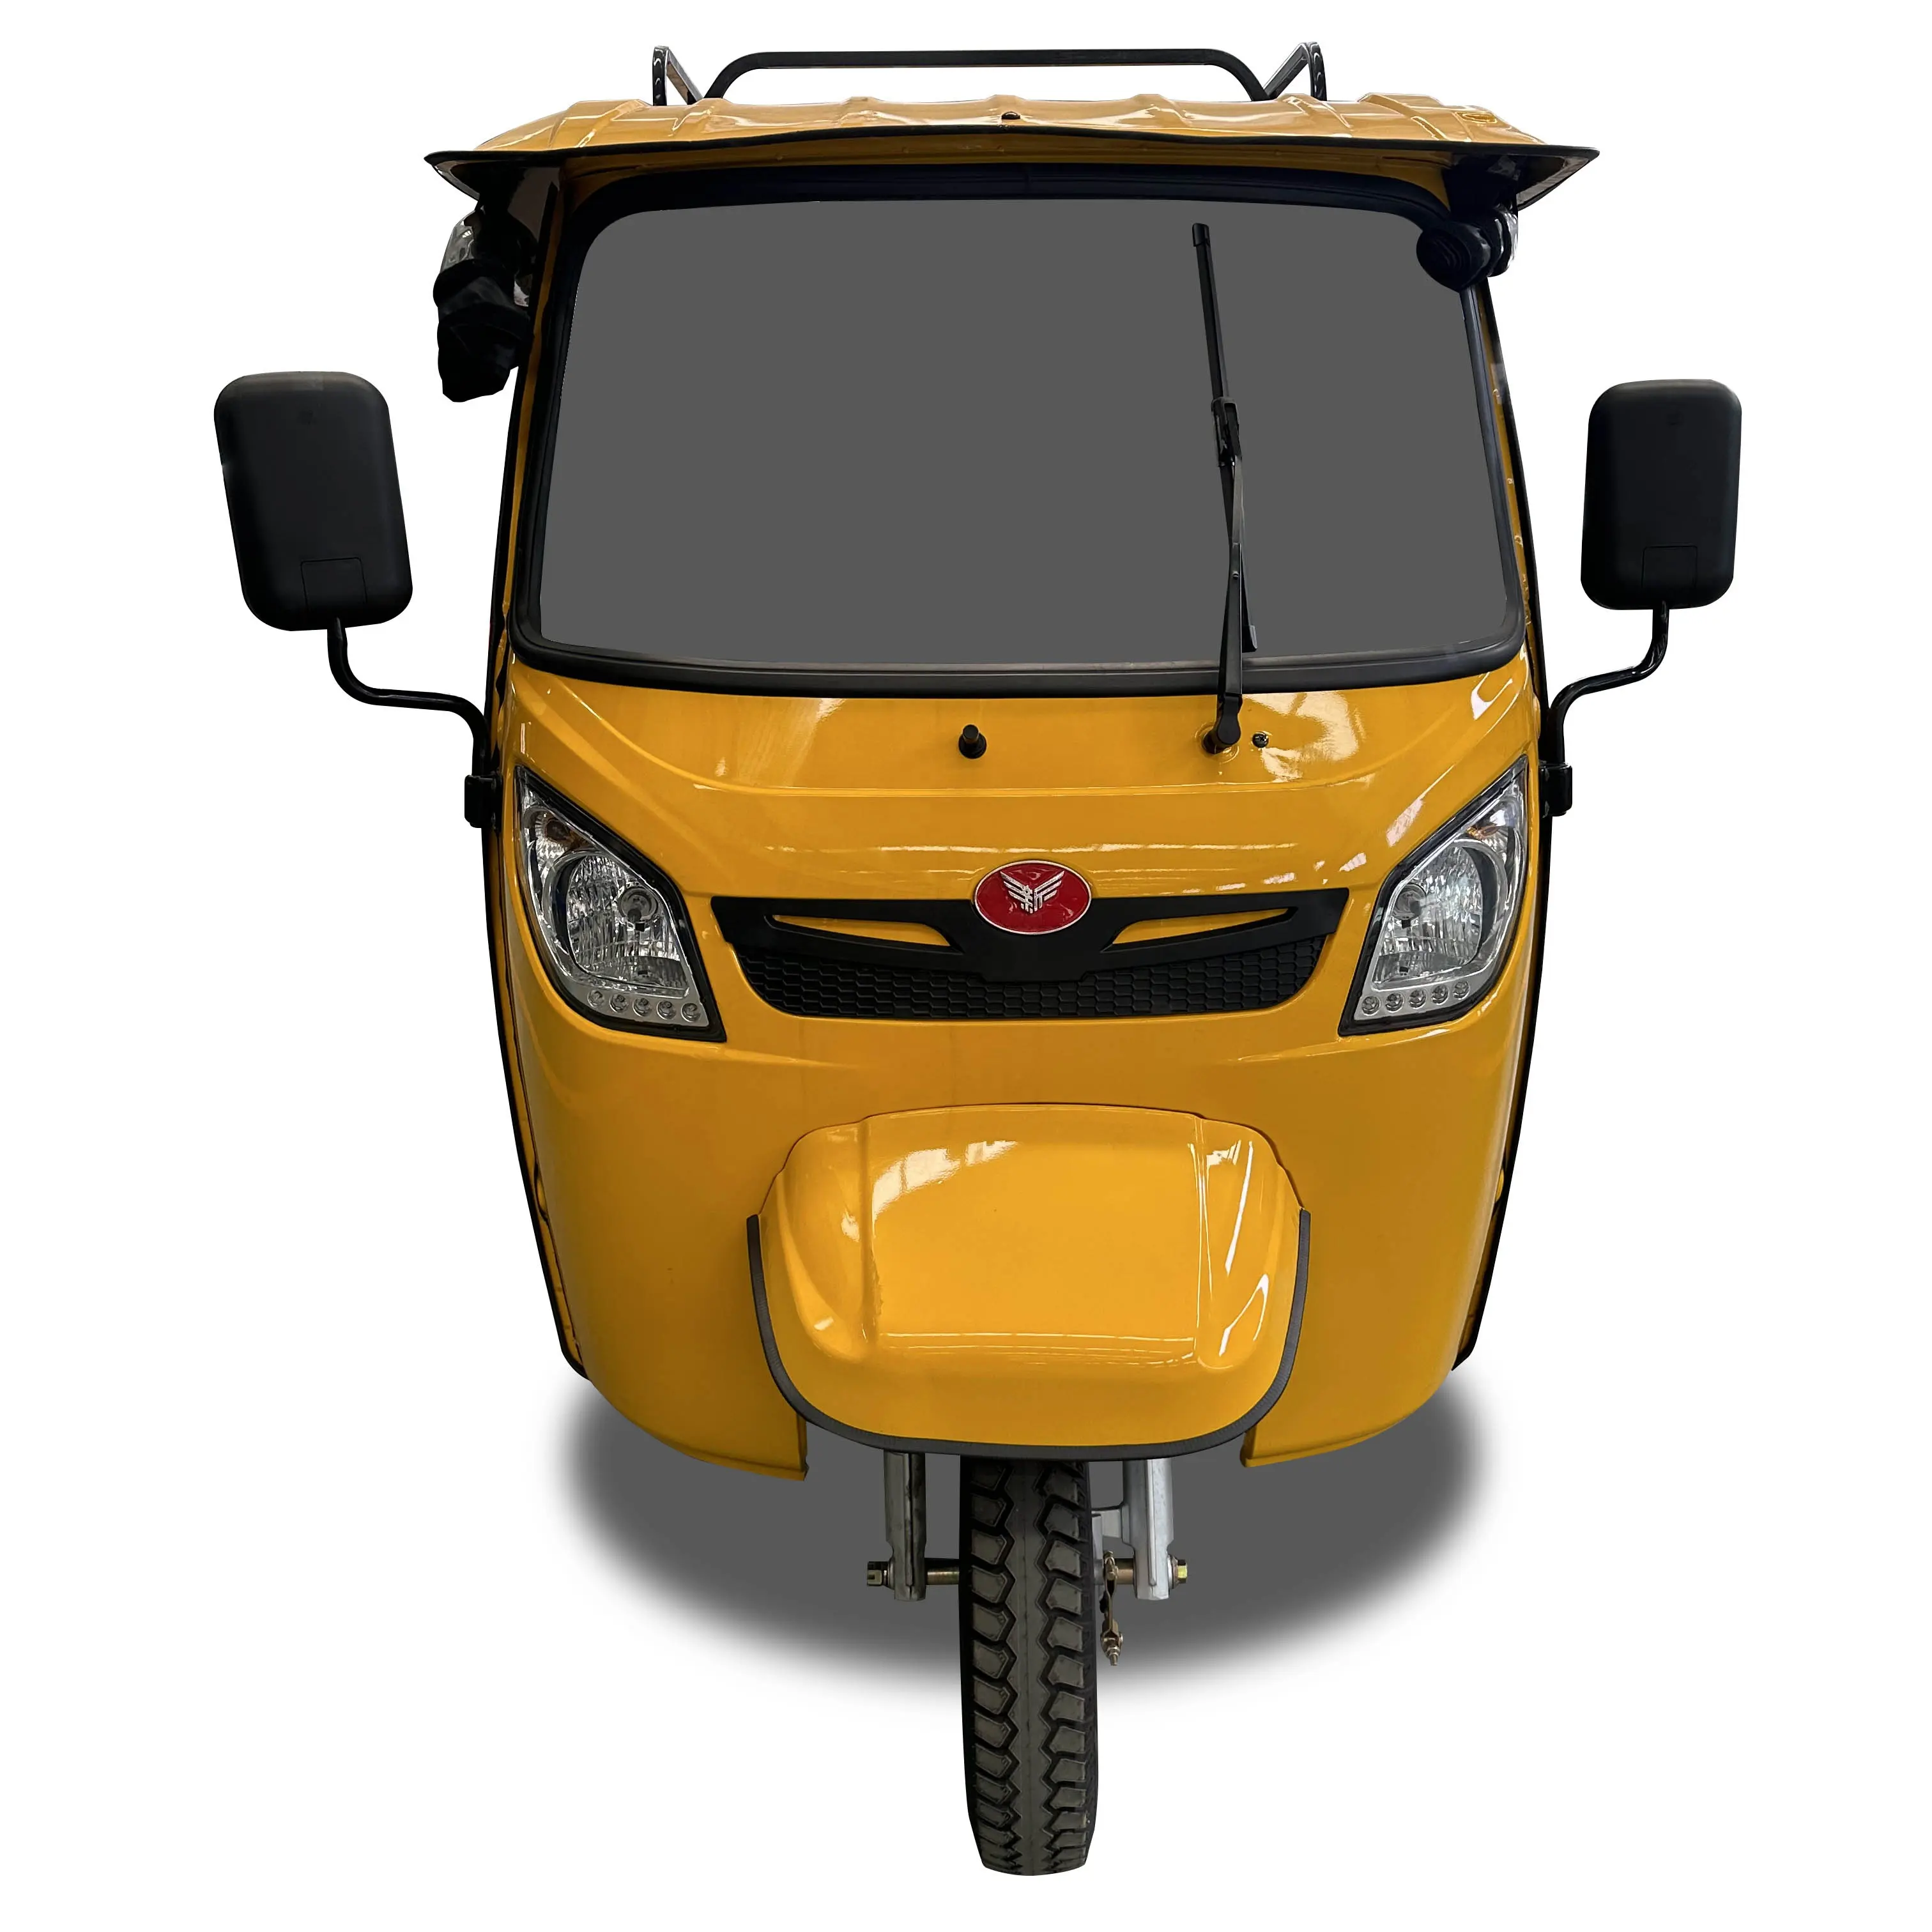 Tricycle टैक्सी मोटो 9 सीटें 200cc बजाज केबिन के साथ पेट्रोल तिपहिया 3 पहिया मोटरसाइकिल